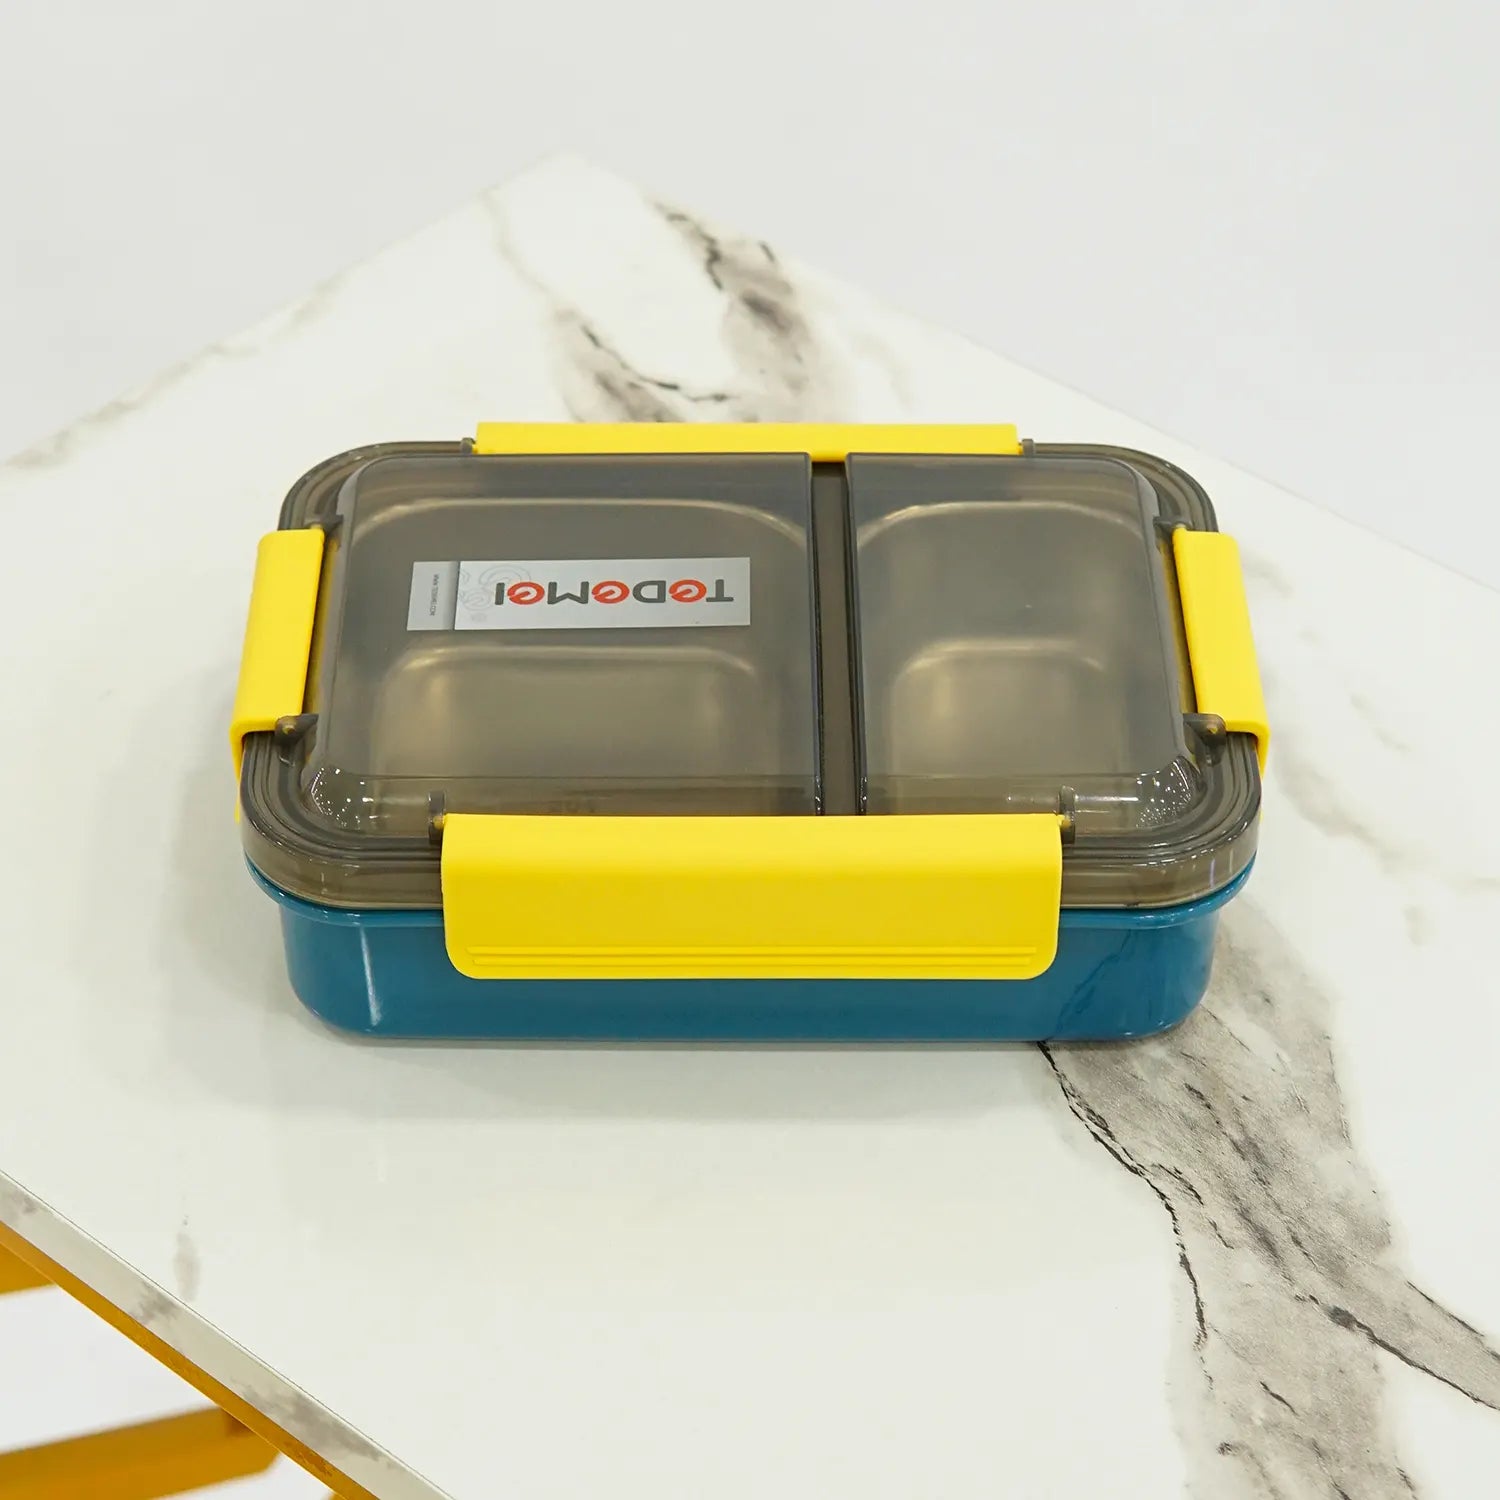 School Days Delight: High-Quality Food-Grade Plastic Lunch Box